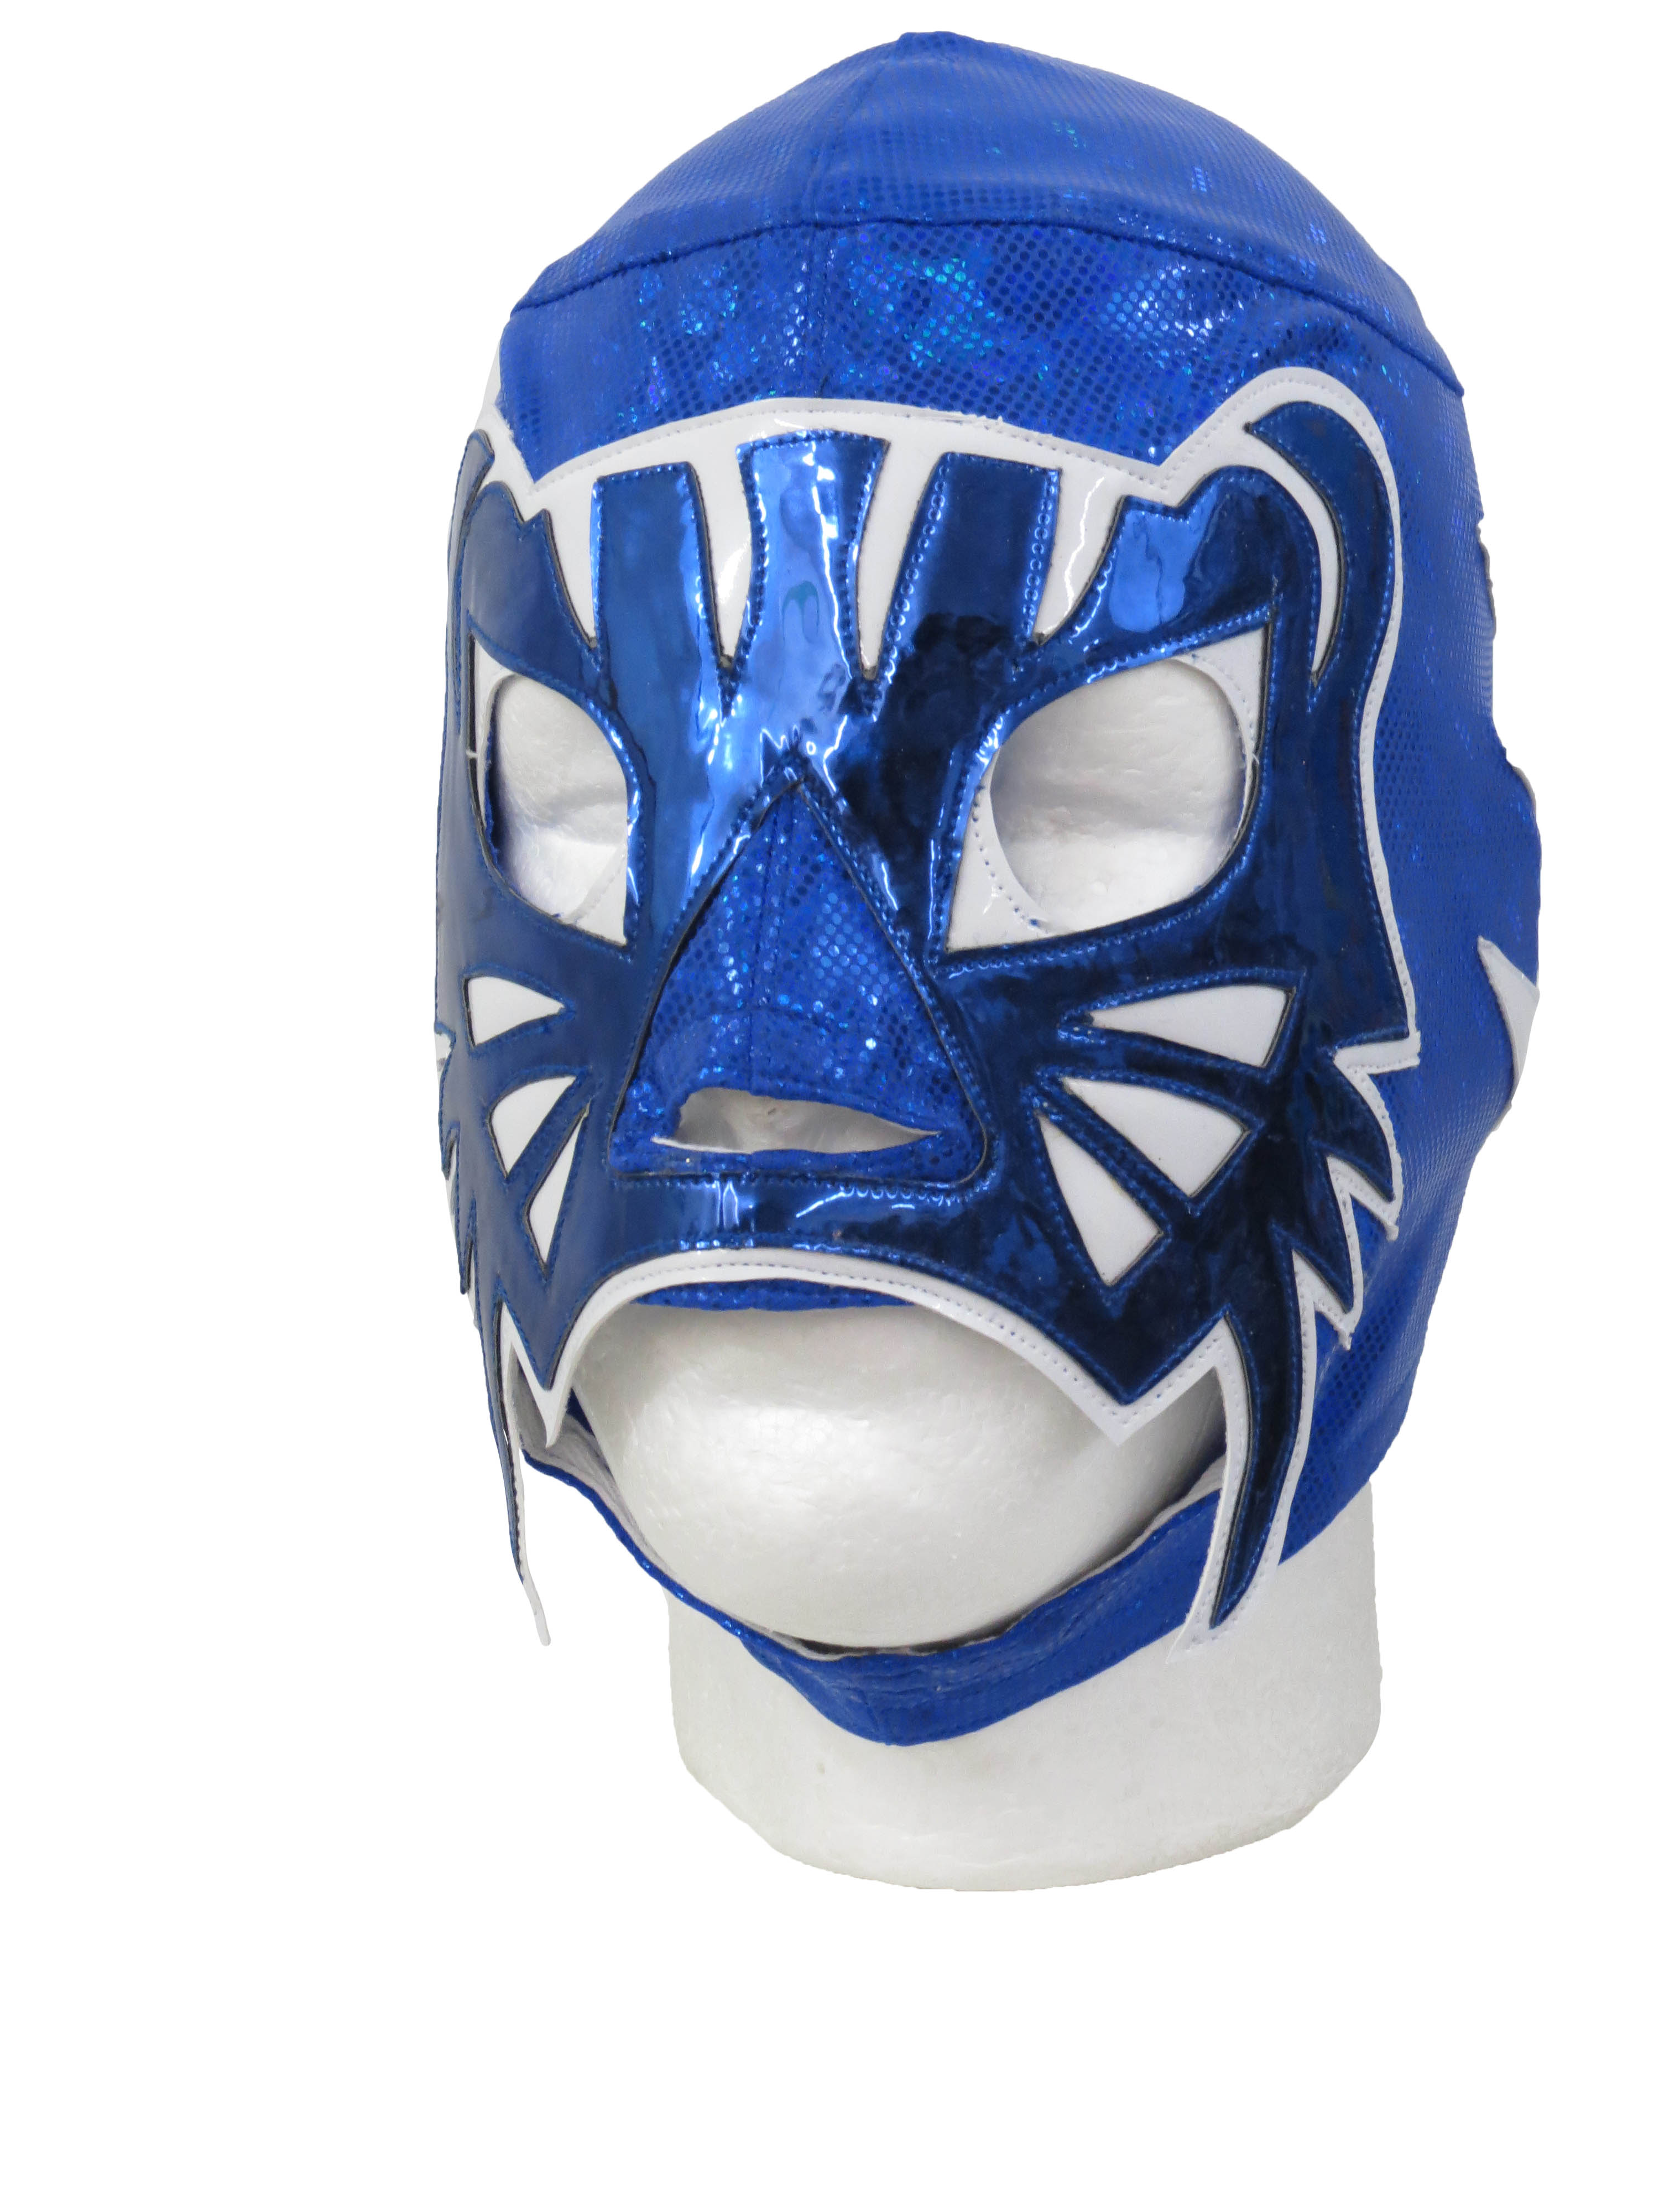 Pro Grade Mexican Luchador Lucha Libre Lycra Mask Blue Panther